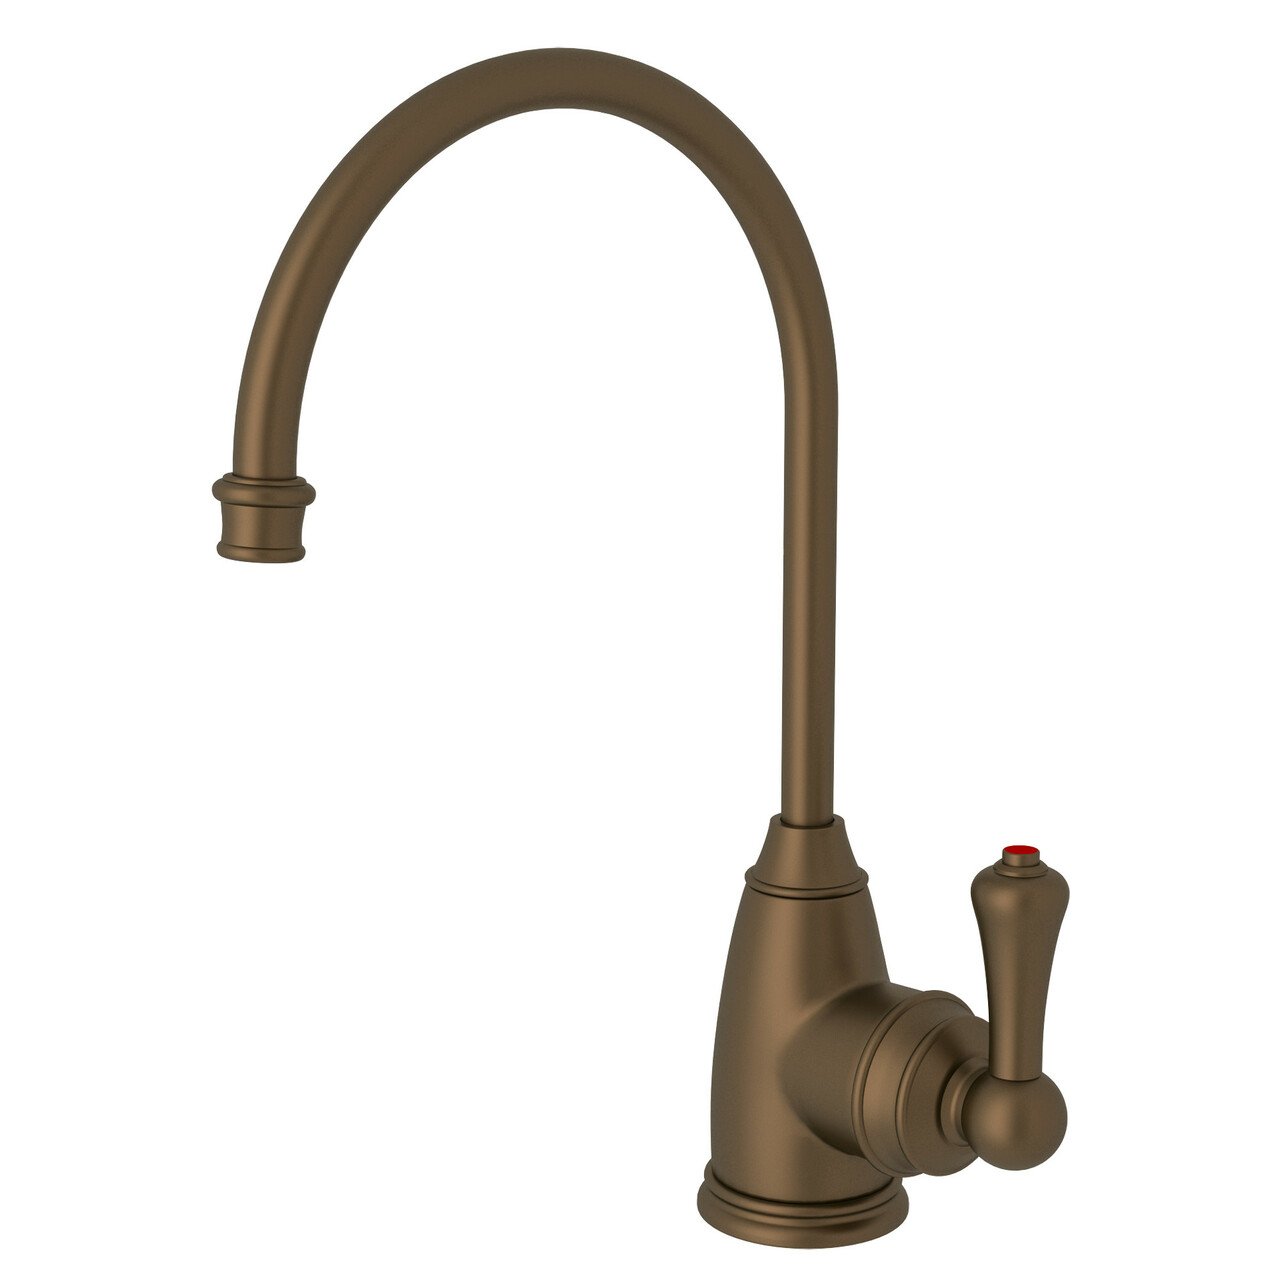 Perrin & Rowe Georgian Era C-Spout Hot Water Faucet - BNGBath